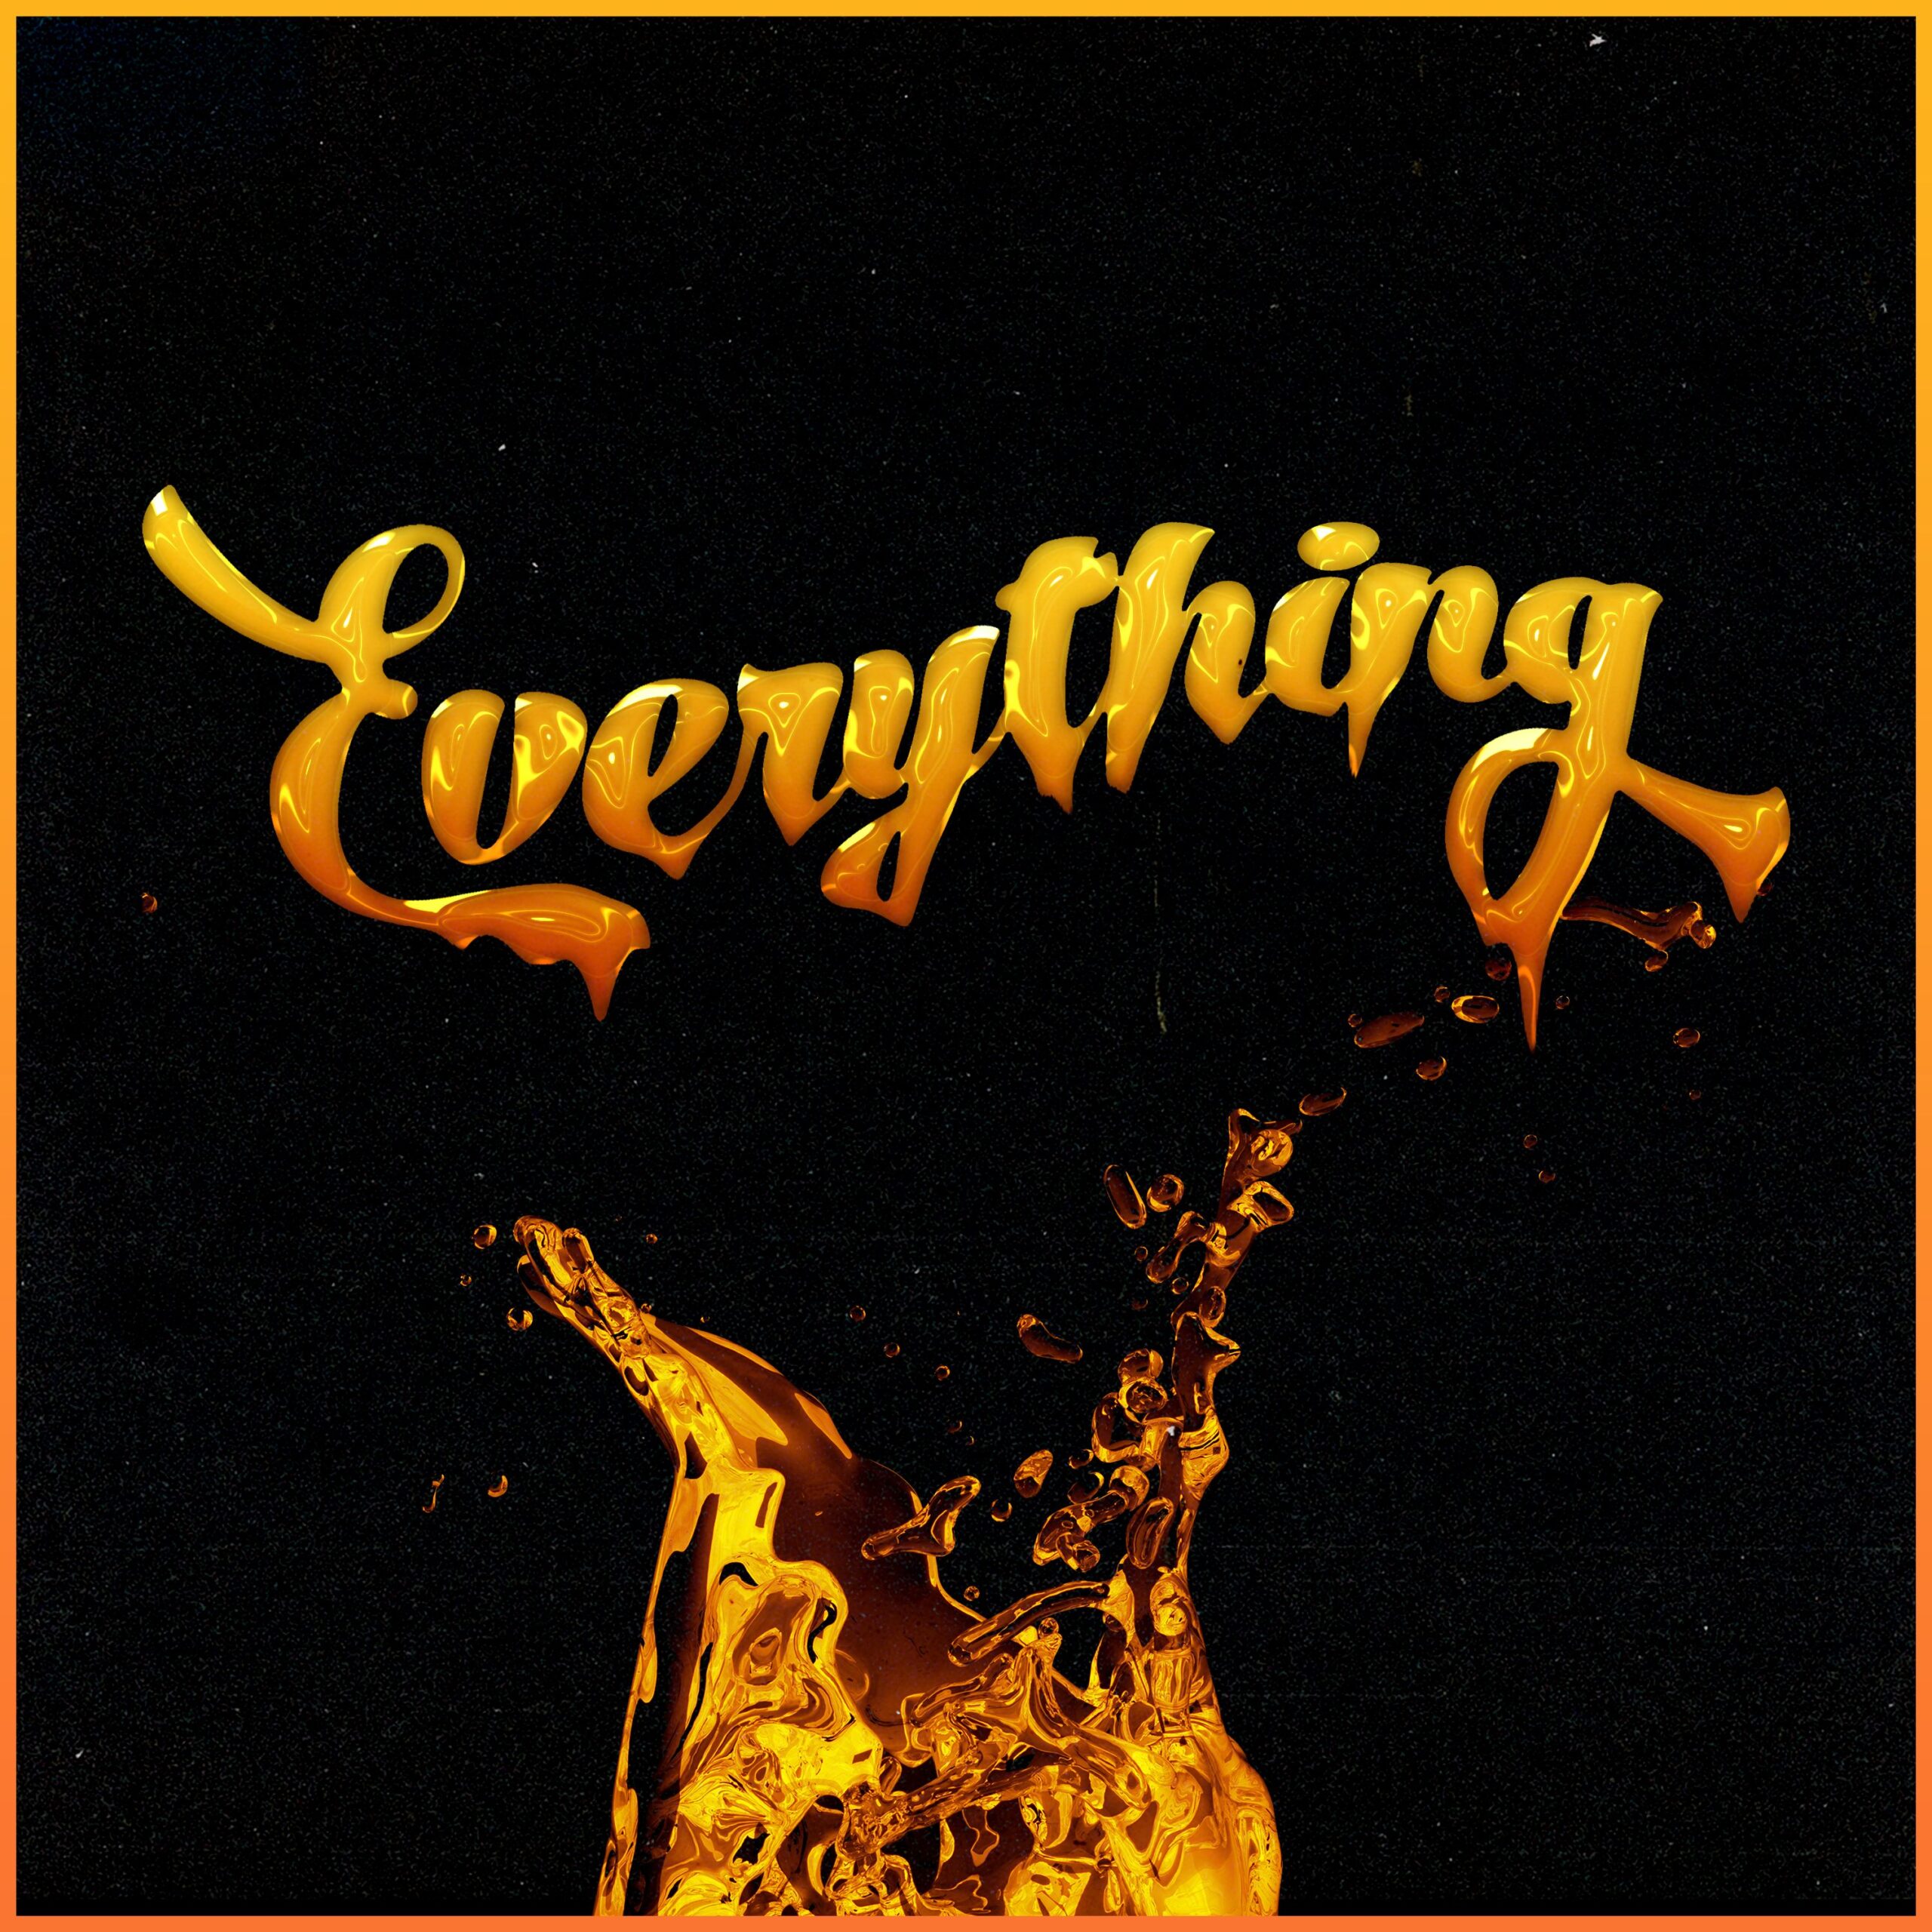 Leeroy Jelks – “Everything”